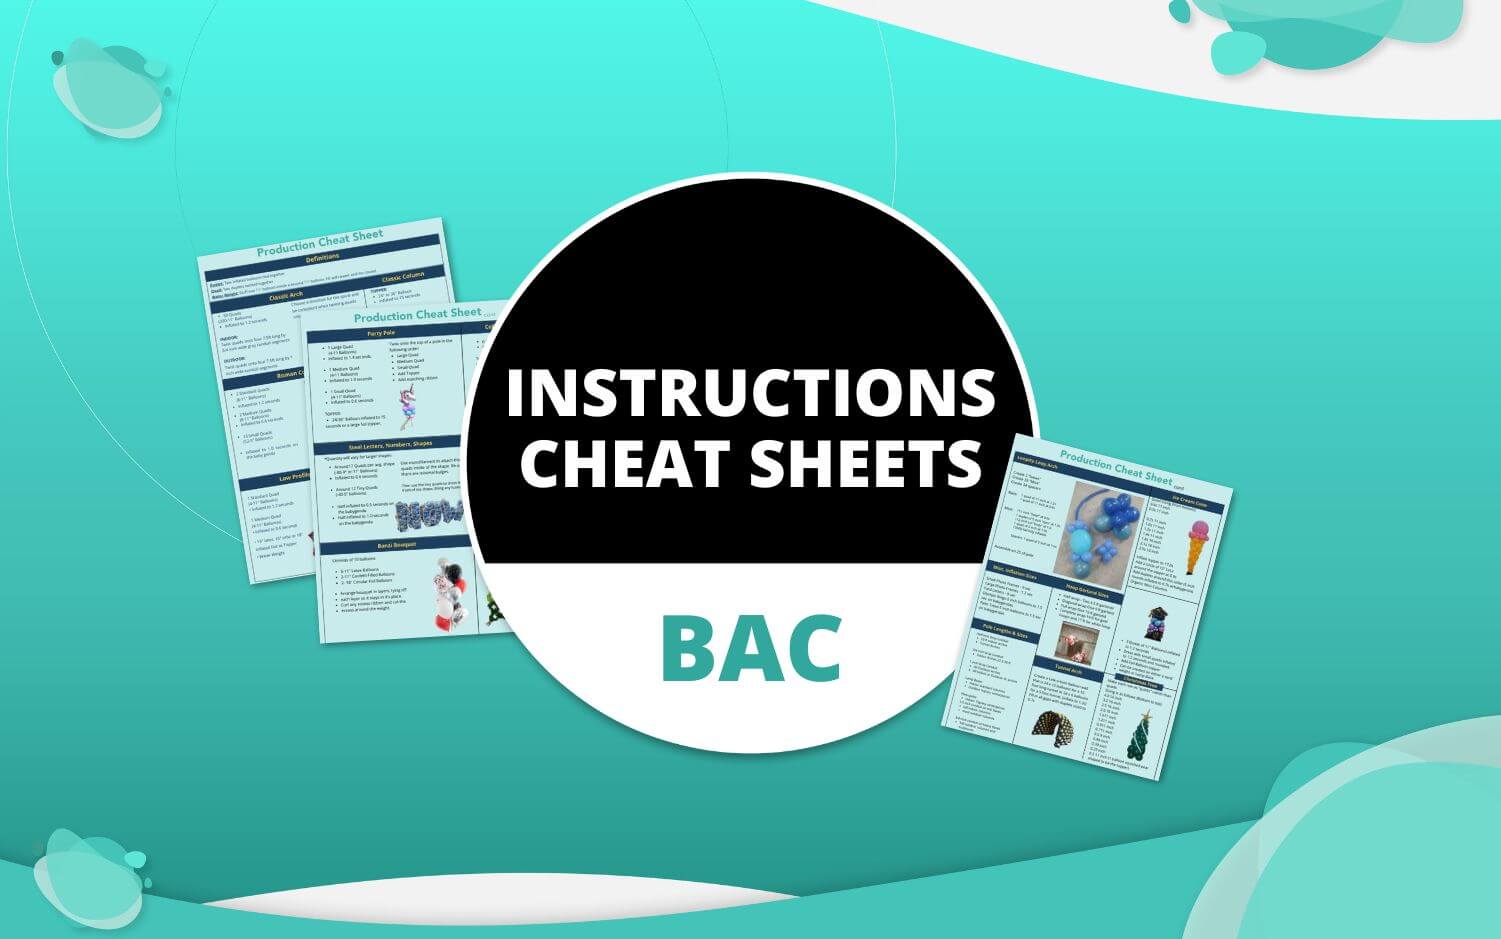 Instructions Cheat Sheets